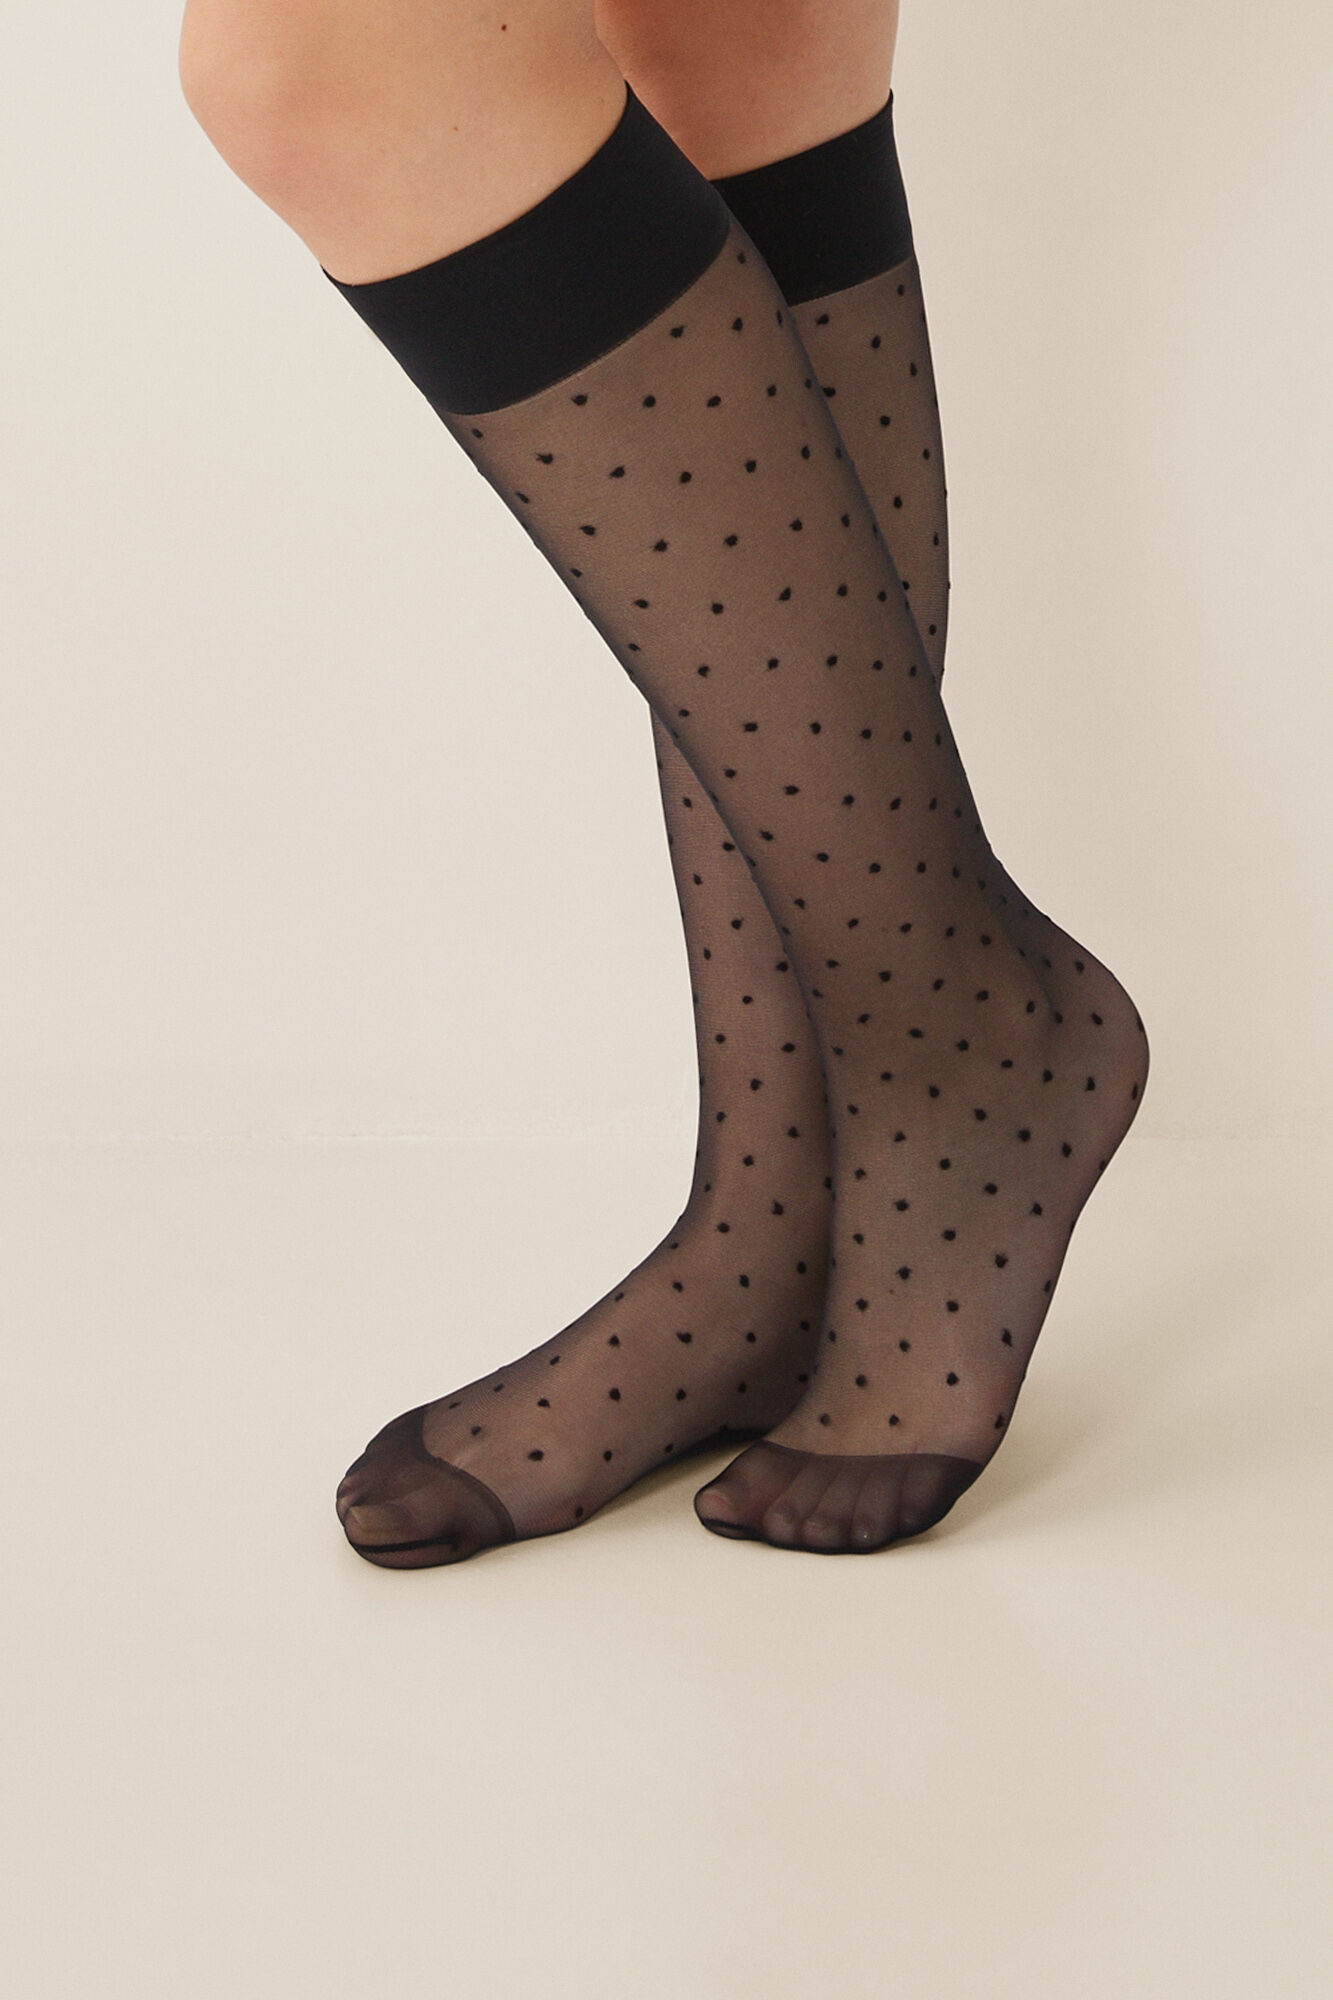 Adidss Socks Tights Stockings Leggings - Buy Adidss Socks Tights Stockings  Leggings online in India